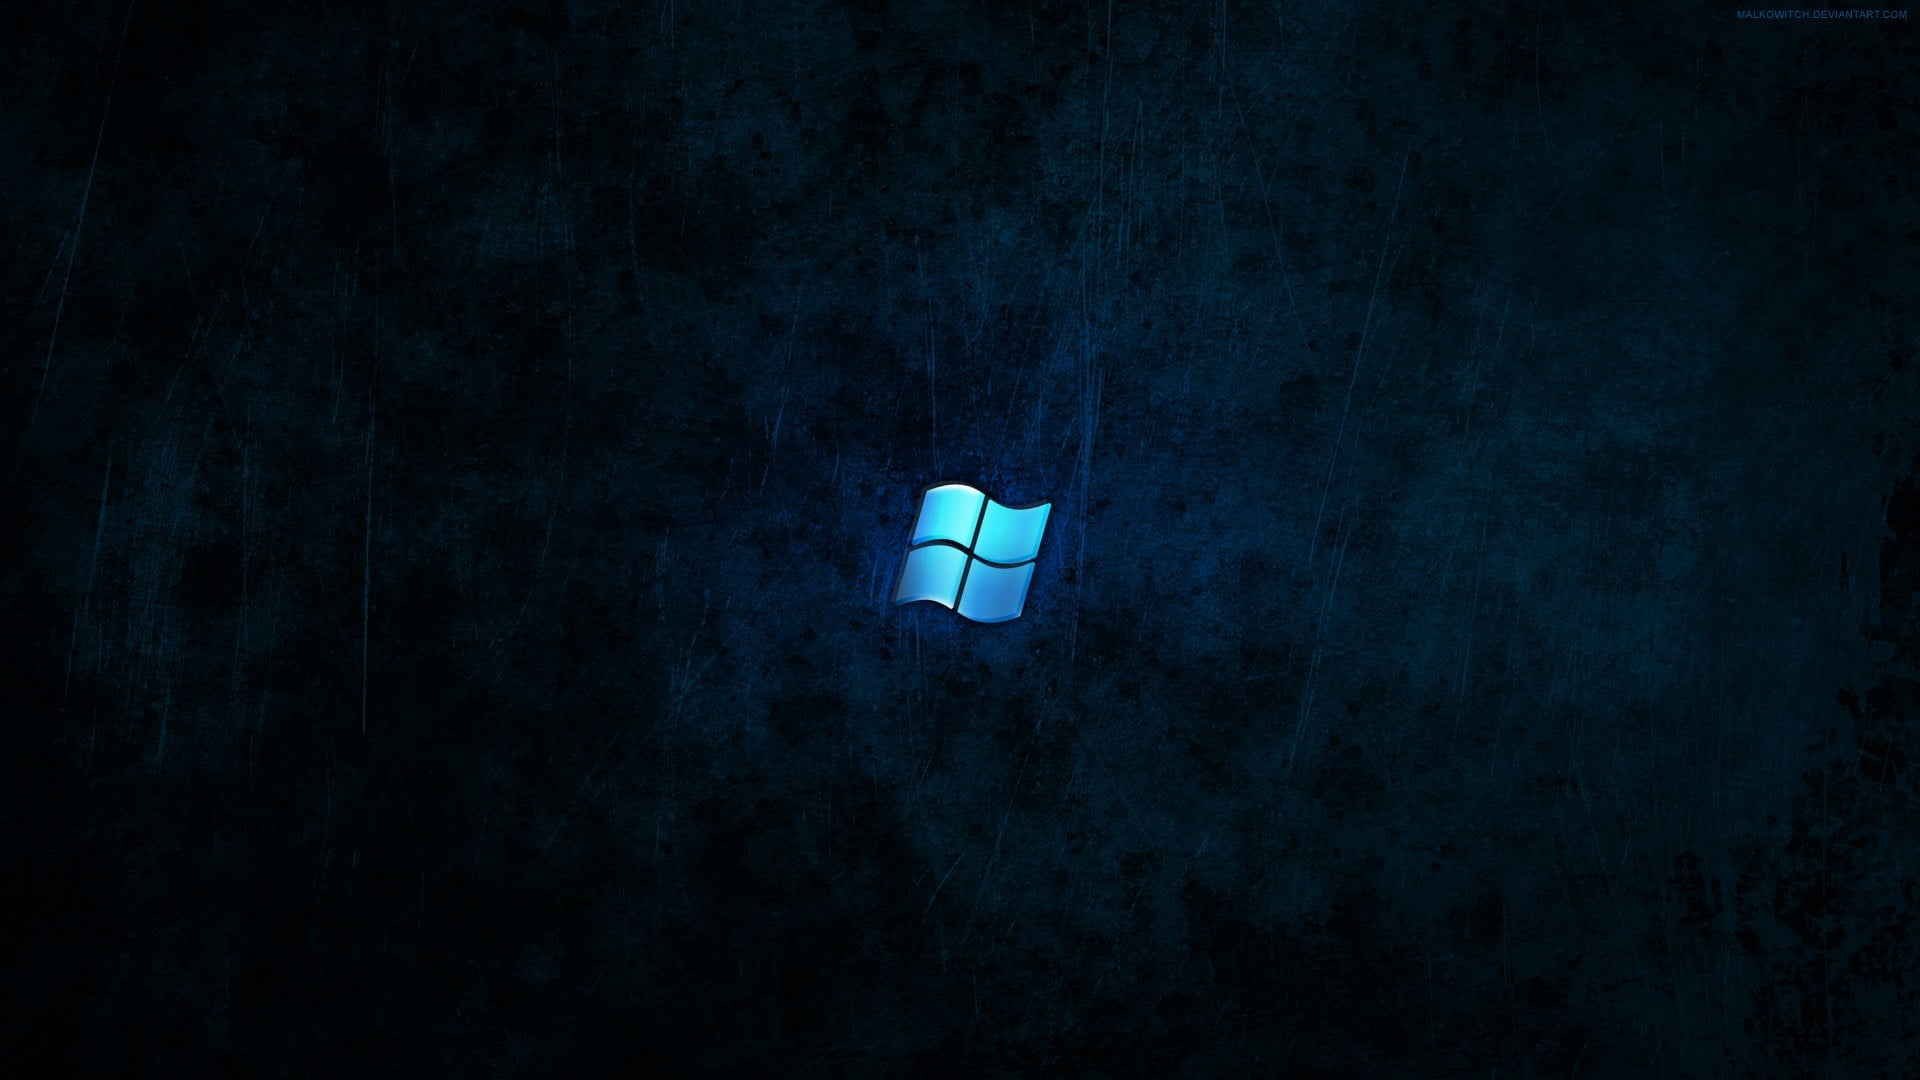 Microsoft Windows logo, Windows 7, dark, blue, Windows 10, digital art